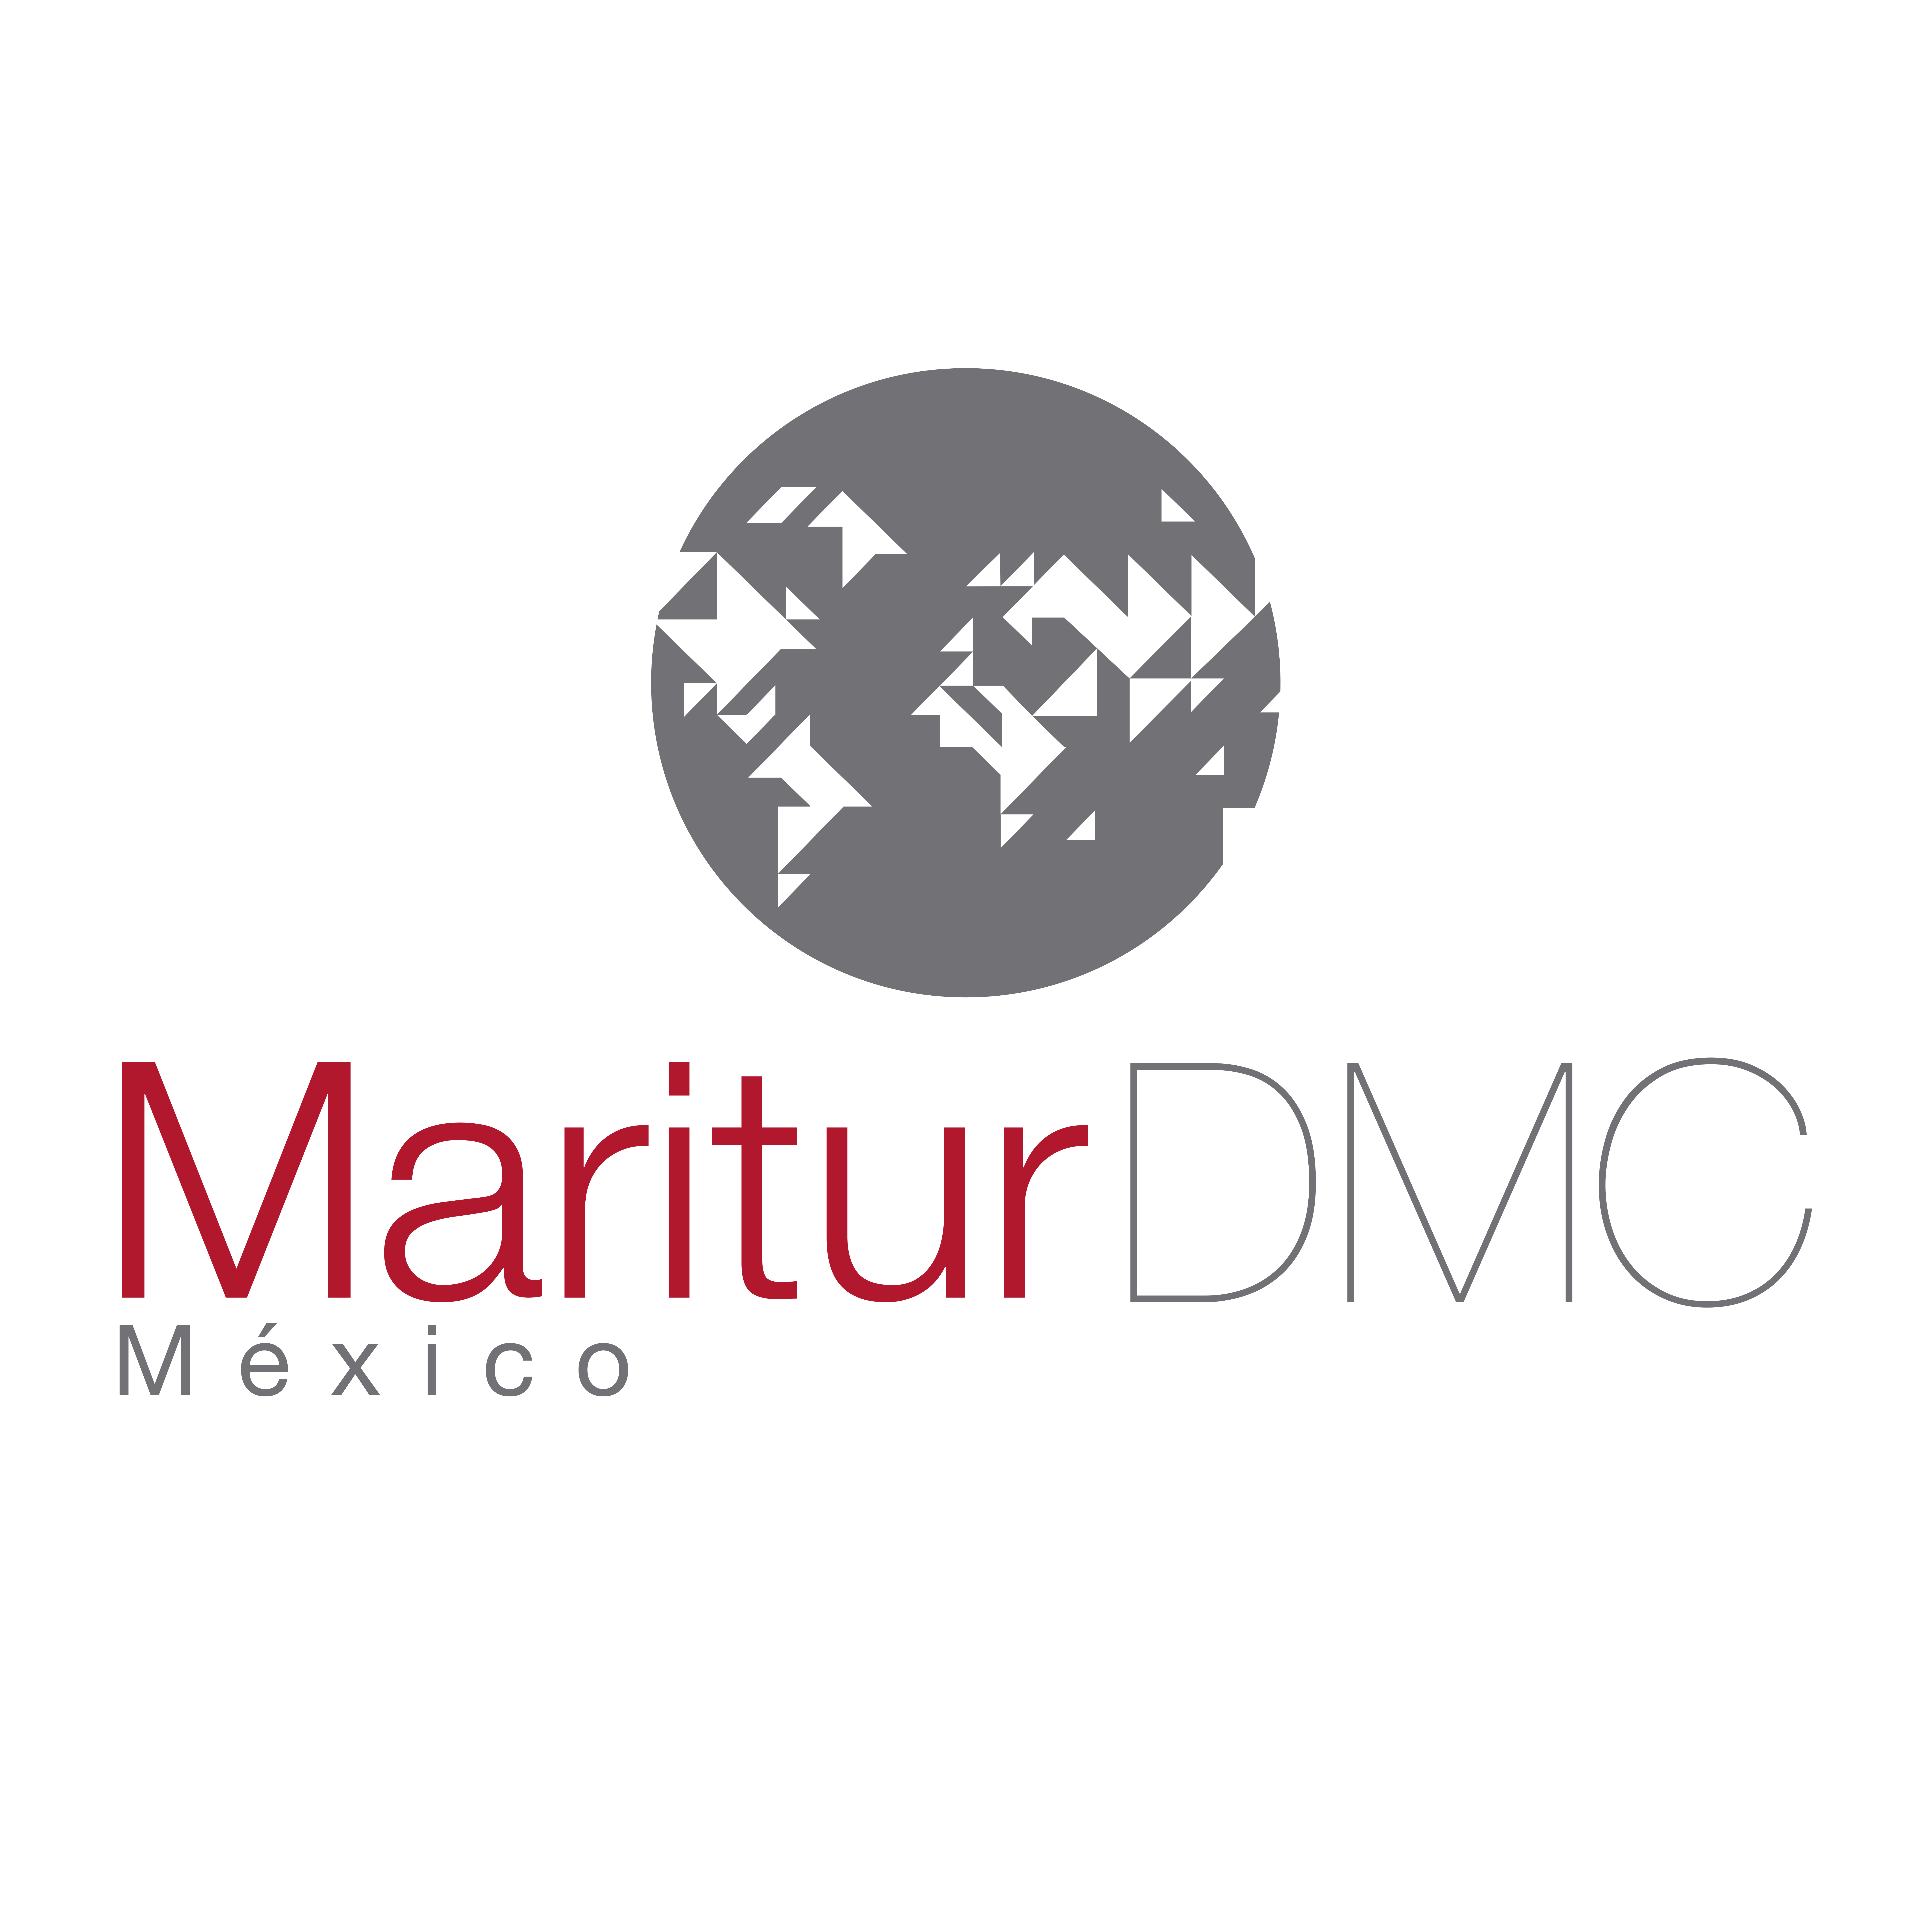 Maritur DMC Logo